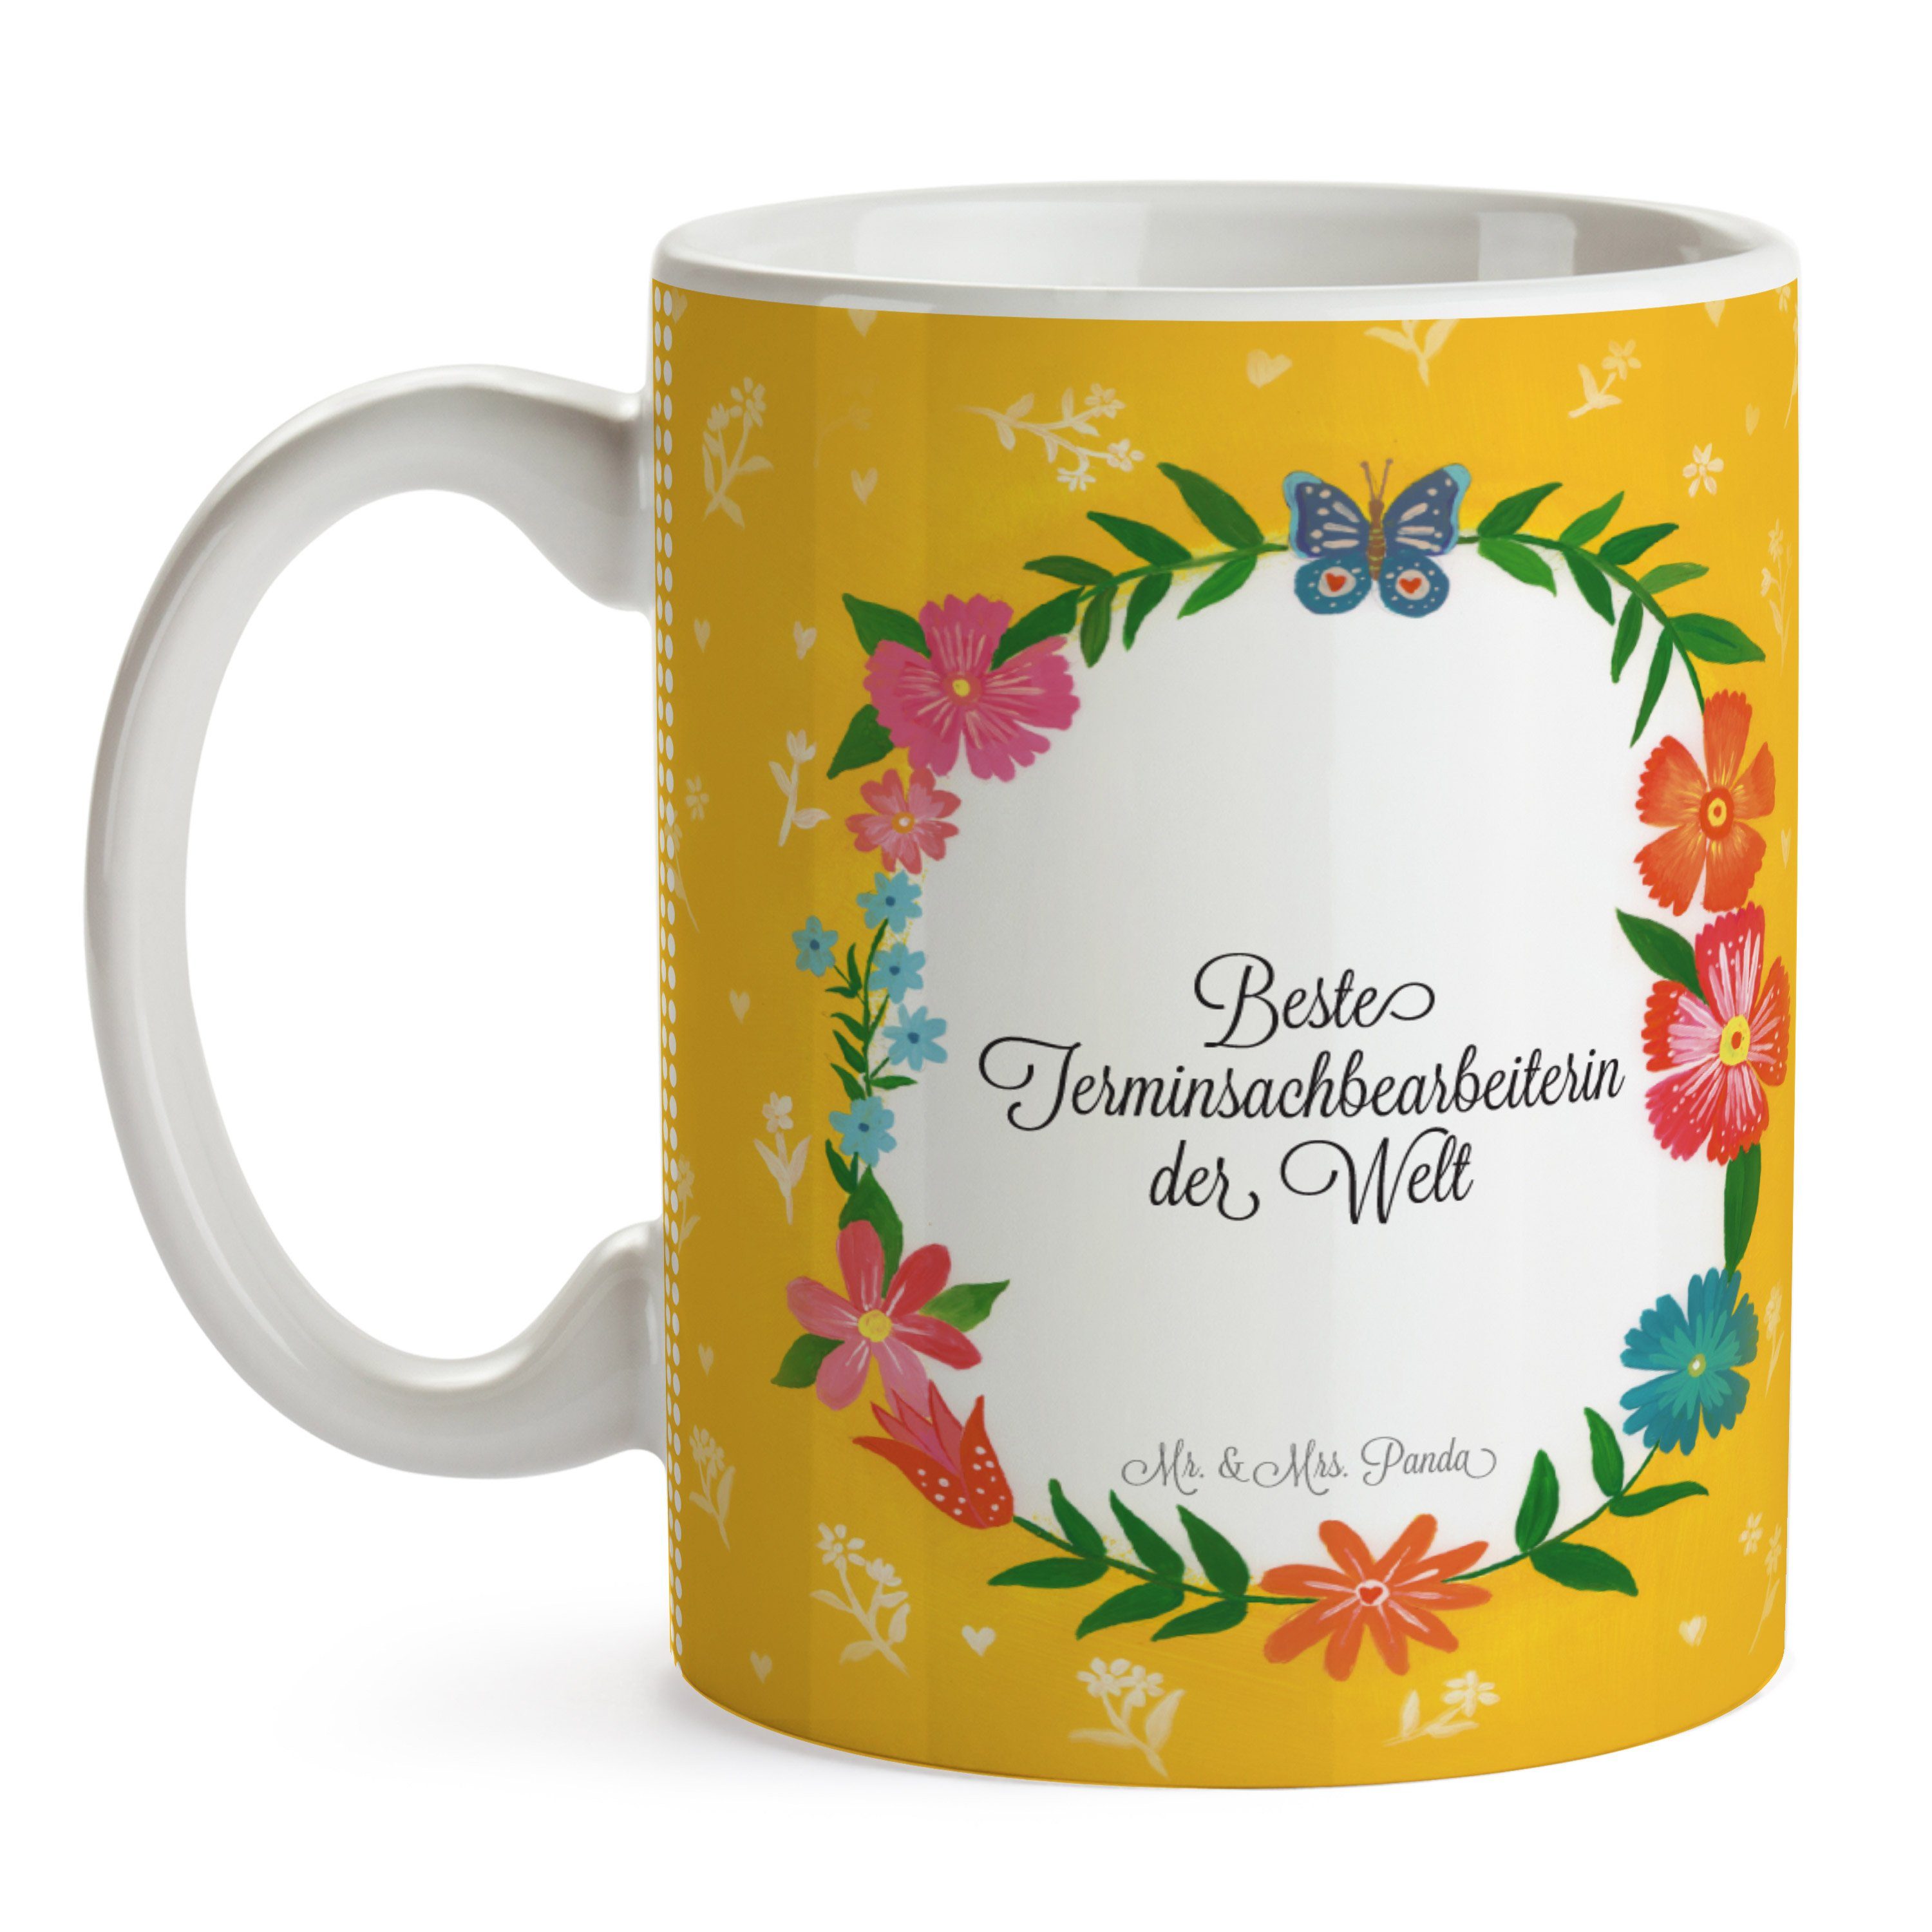 Mr. & Mrs. Panda Tasse Geschenk, Rente, - Abschluss, Kaffeetasse, Sch, Terminsachbearbeiterin Keramik